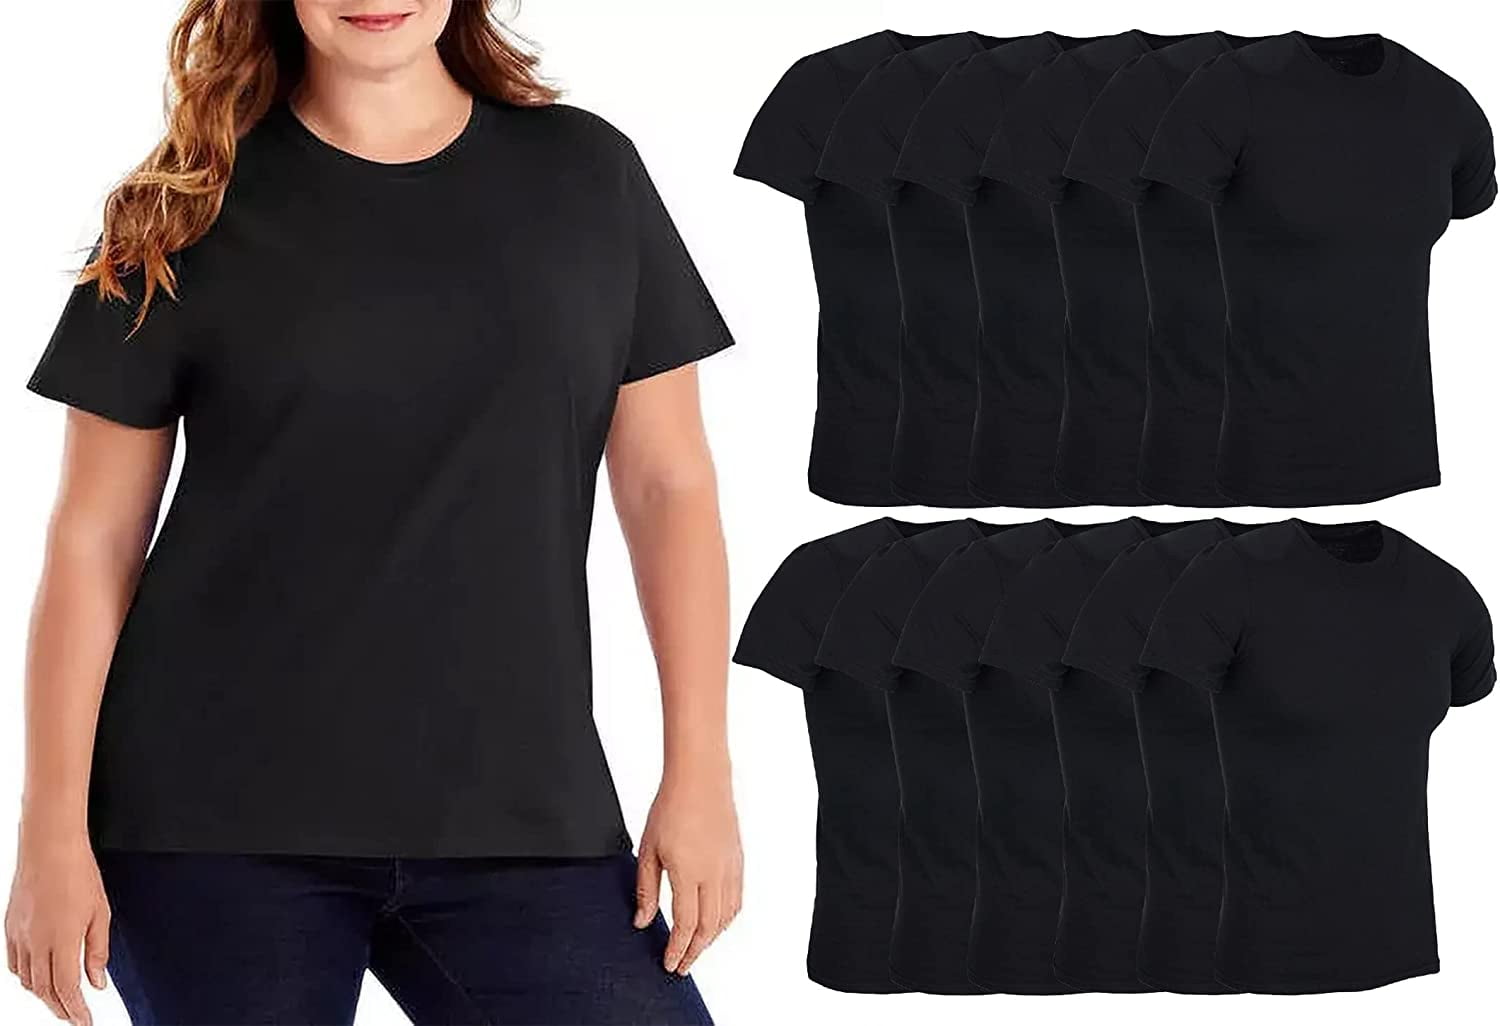 SOCKSN'BULK 12 Pack of Womens T-Shirts in Bulk, Cotton Crew Neck Scoop  Short Sleeve Tees Black Colors Bulk